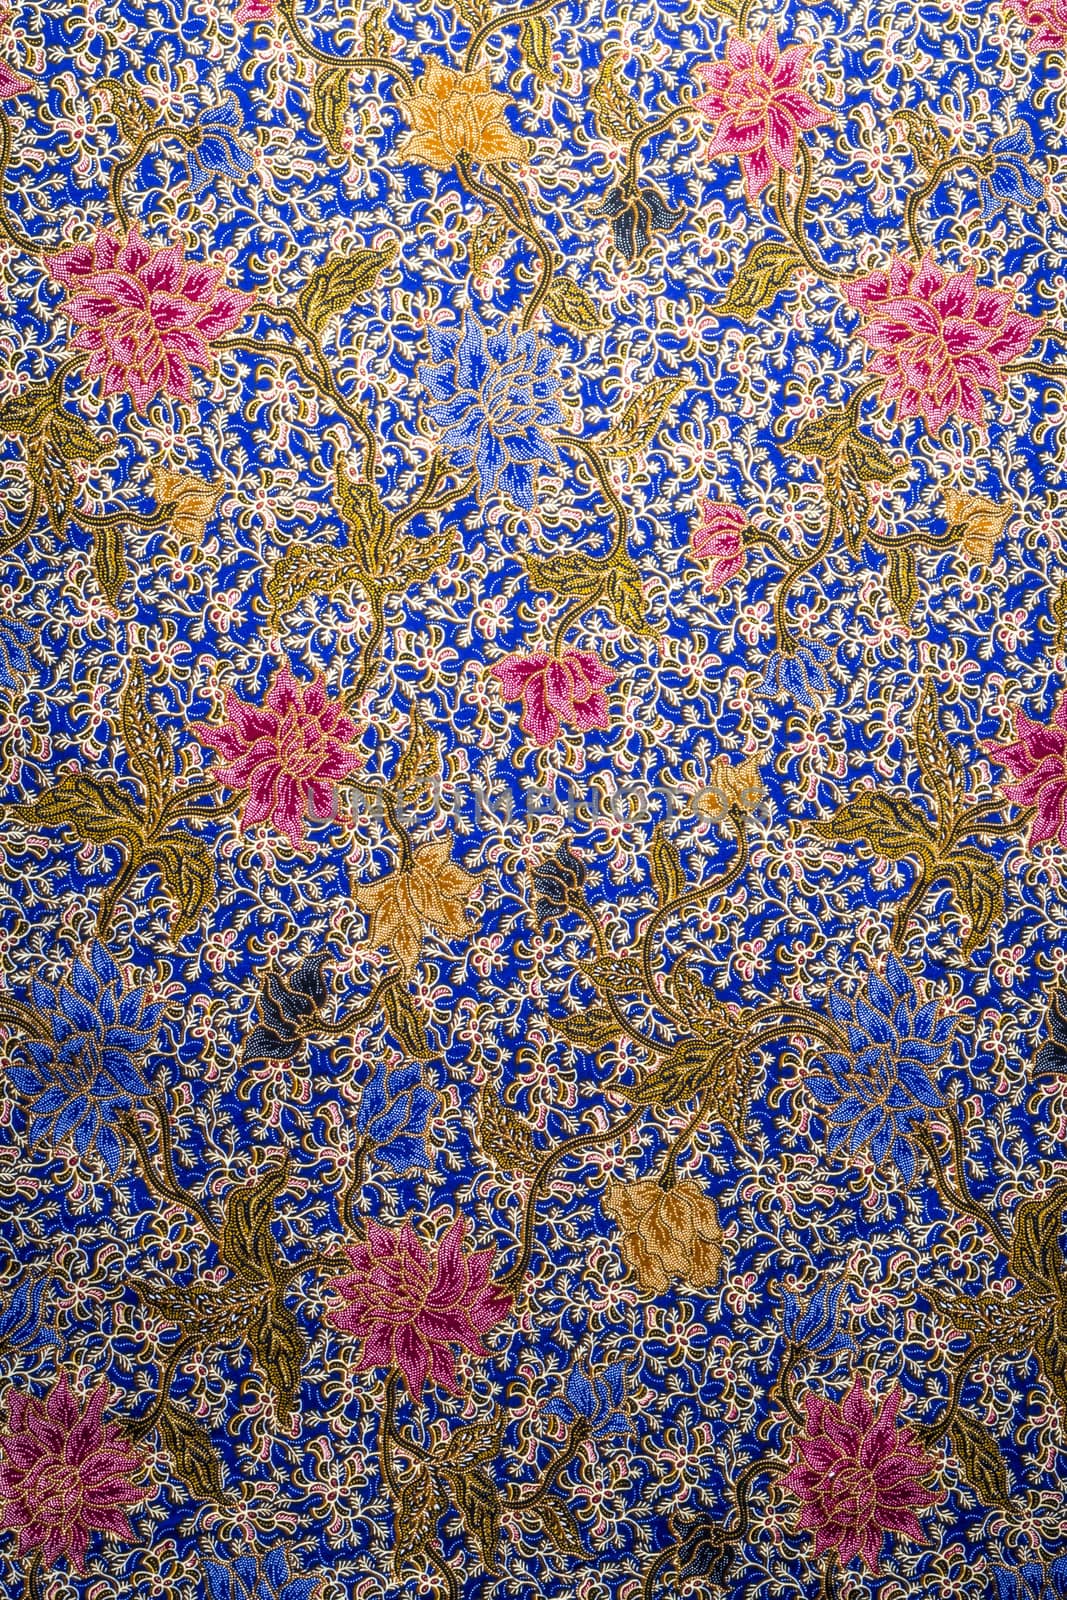 Colorful flower pattern on batik fabric bacground